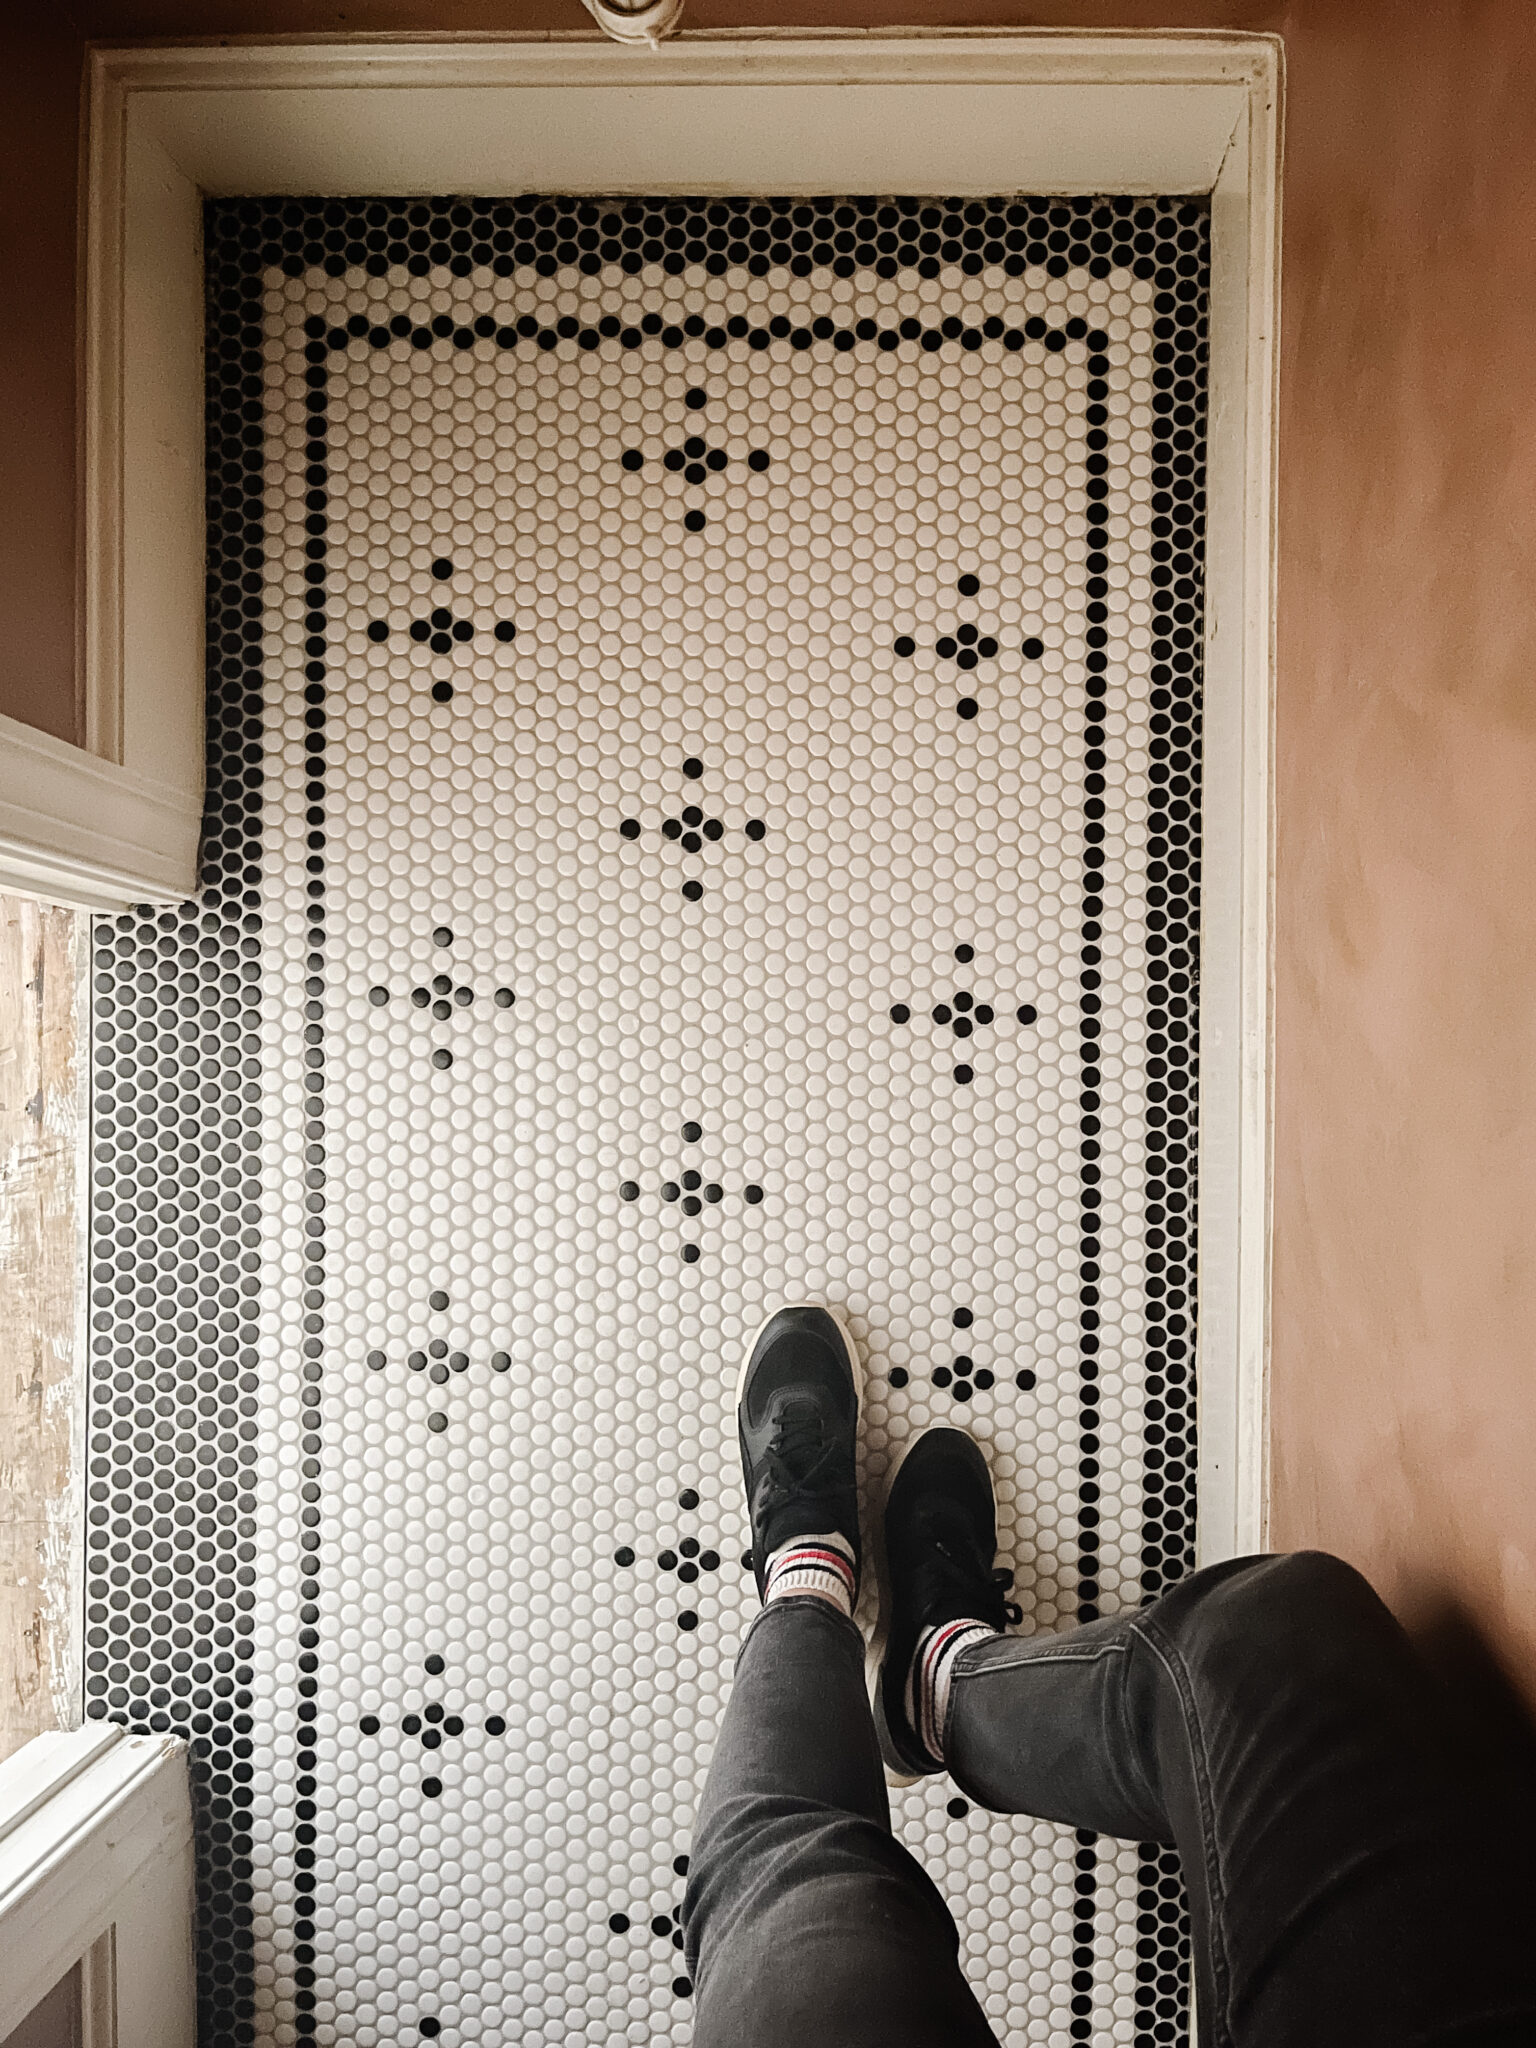 Diy Your Own Penny Tile Patterned Floor, Round Tile Shower Floor